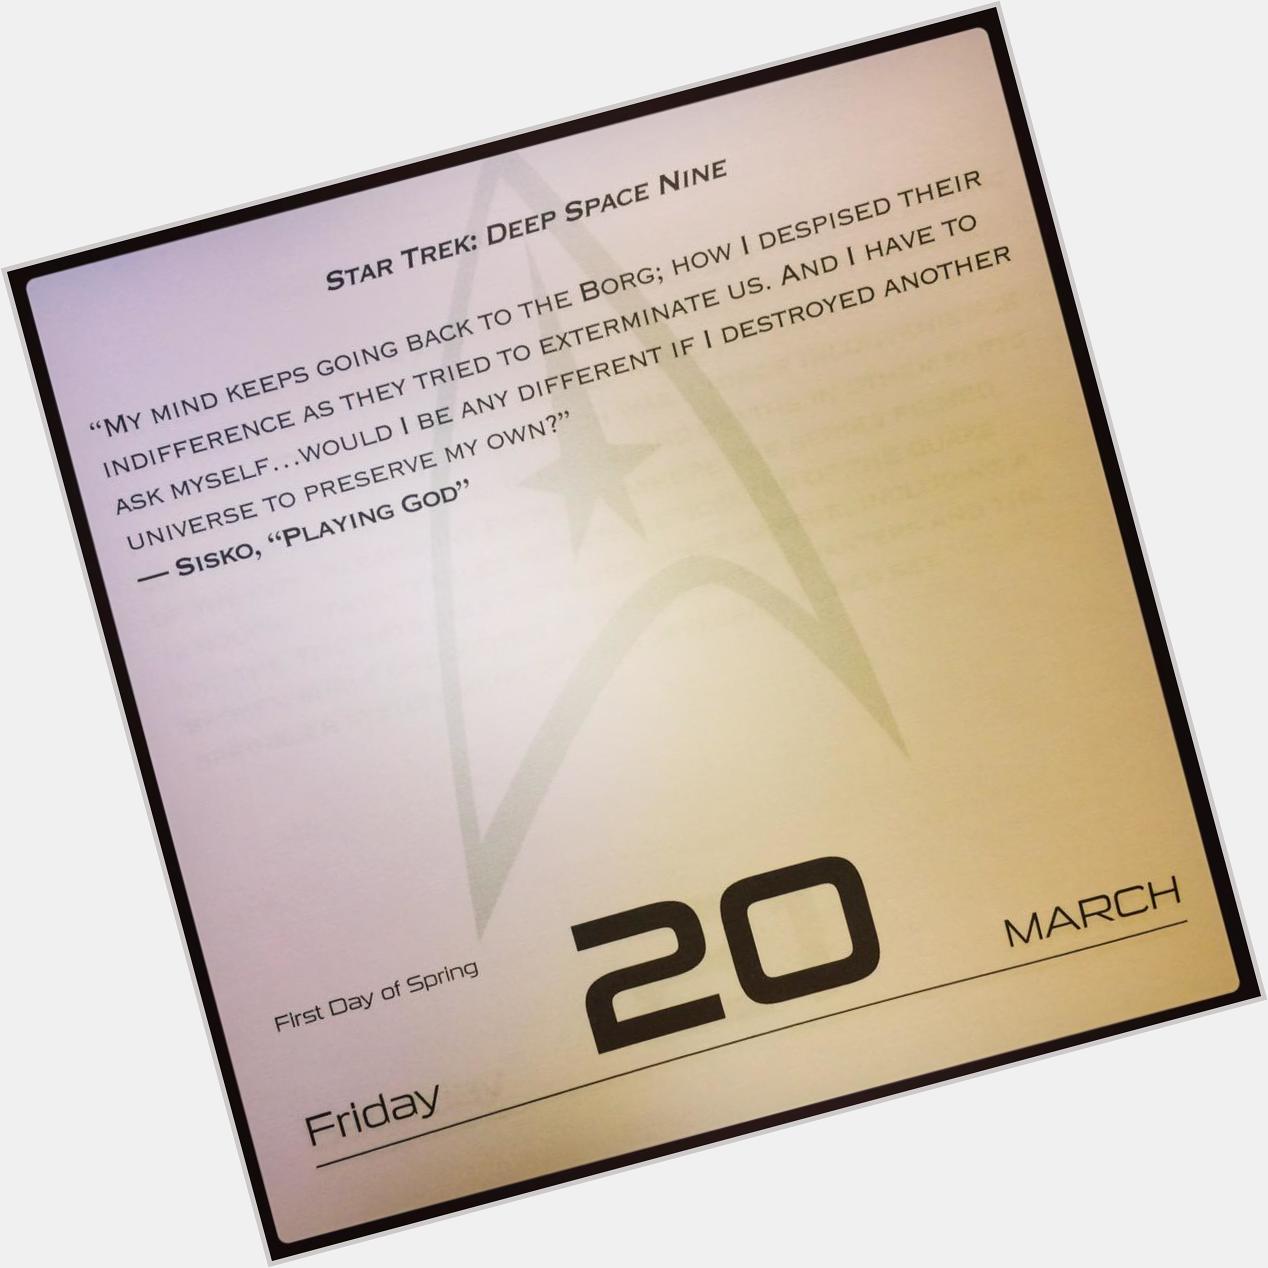 This Day in Trek - March 20, 2015 Happy Birthday John de Lancie! 